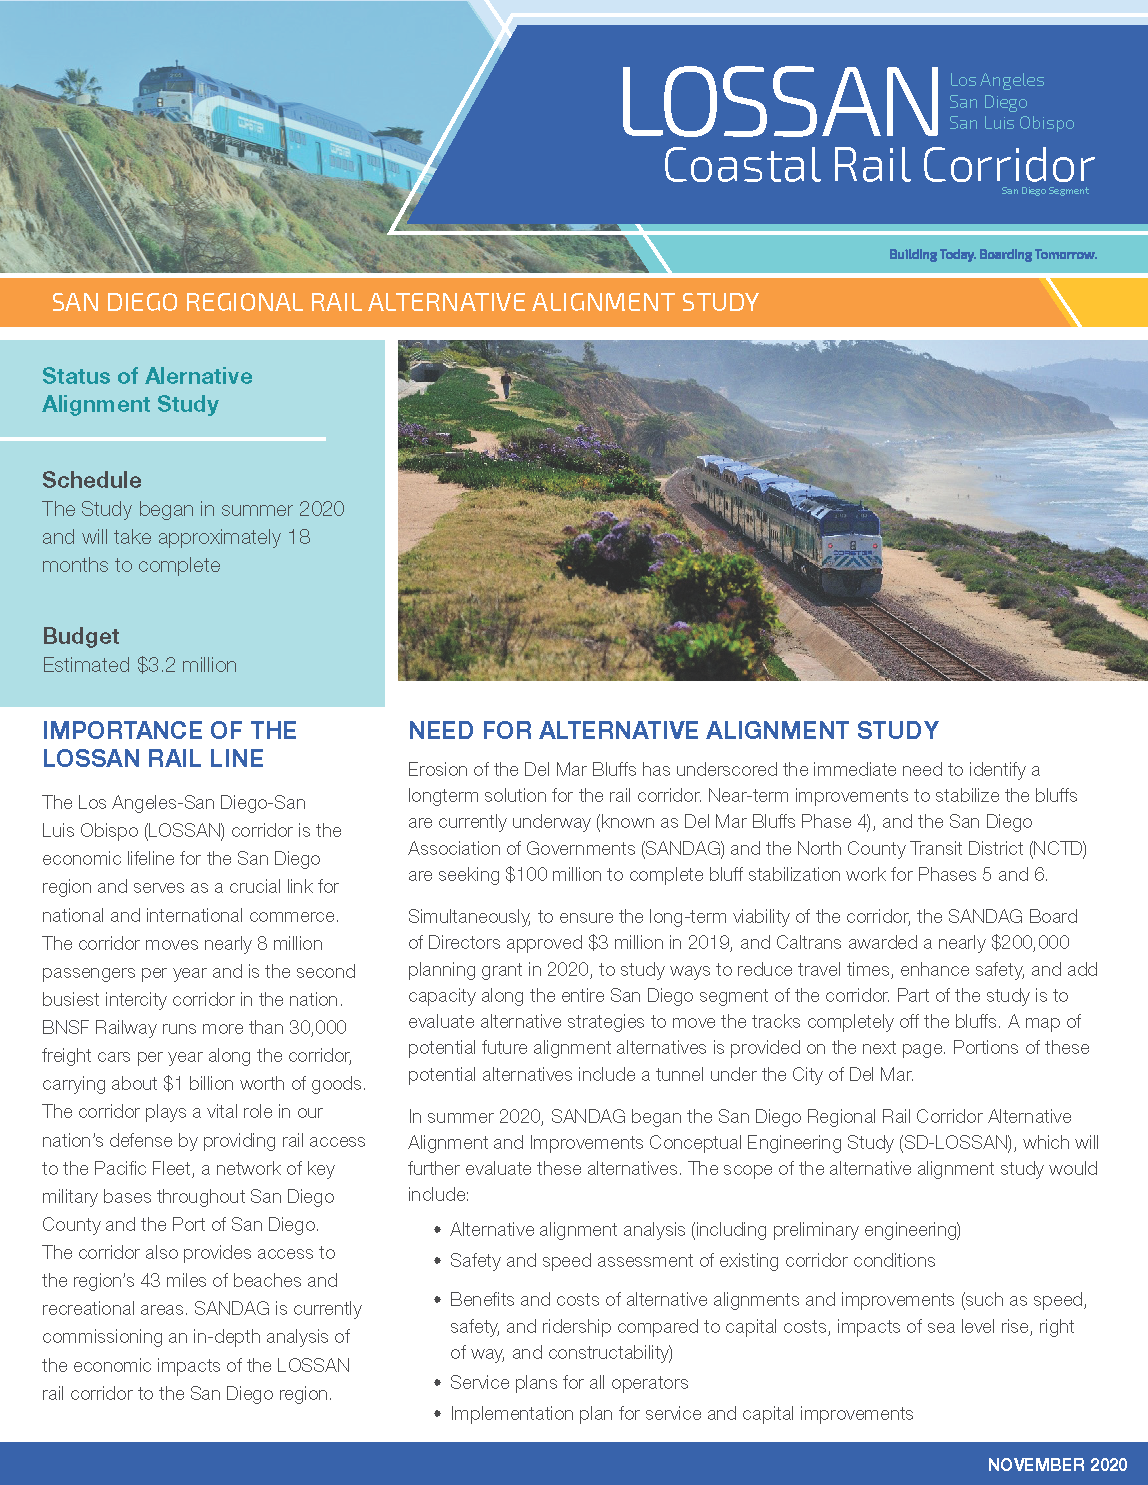 San Diego Regional Rail Alternative Alignments Study Fact Sheet